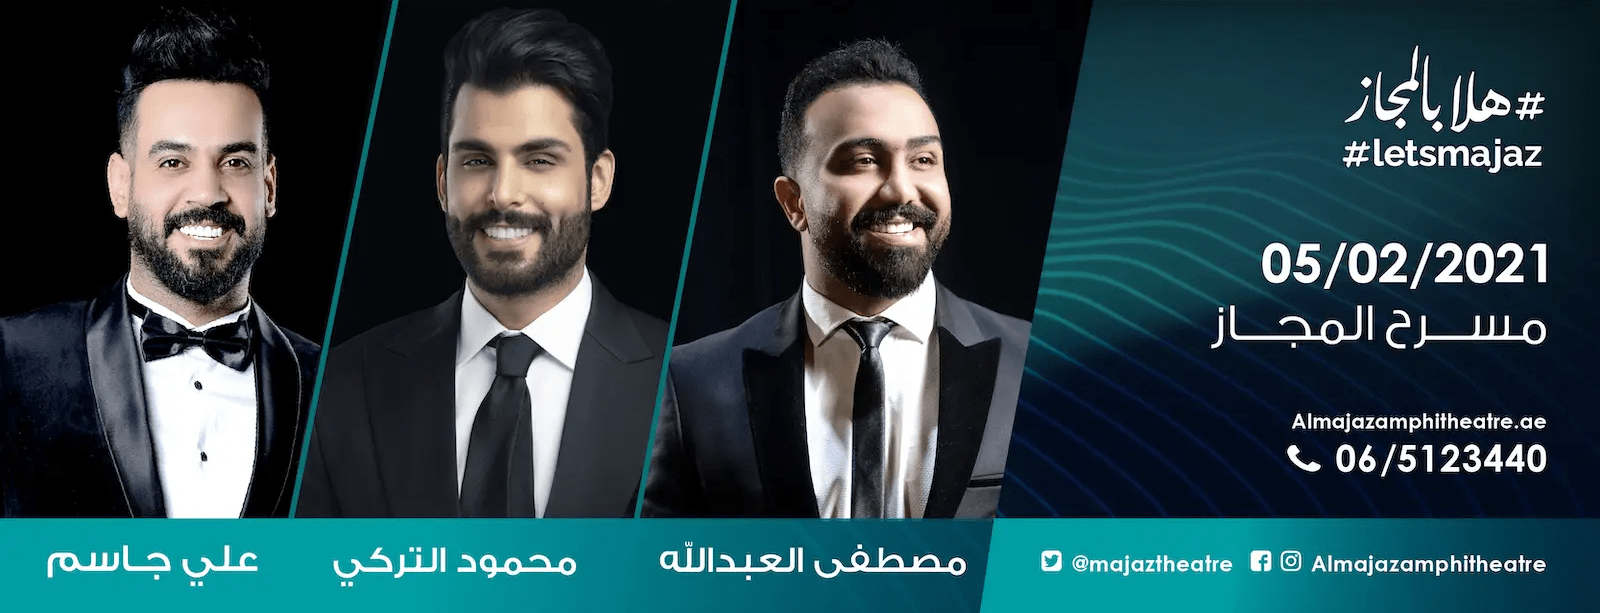 Ali Jassim, Mustafa Al-Abdallah, and Mahmoud Al Turki Live Concert - Coming Soon in UAE